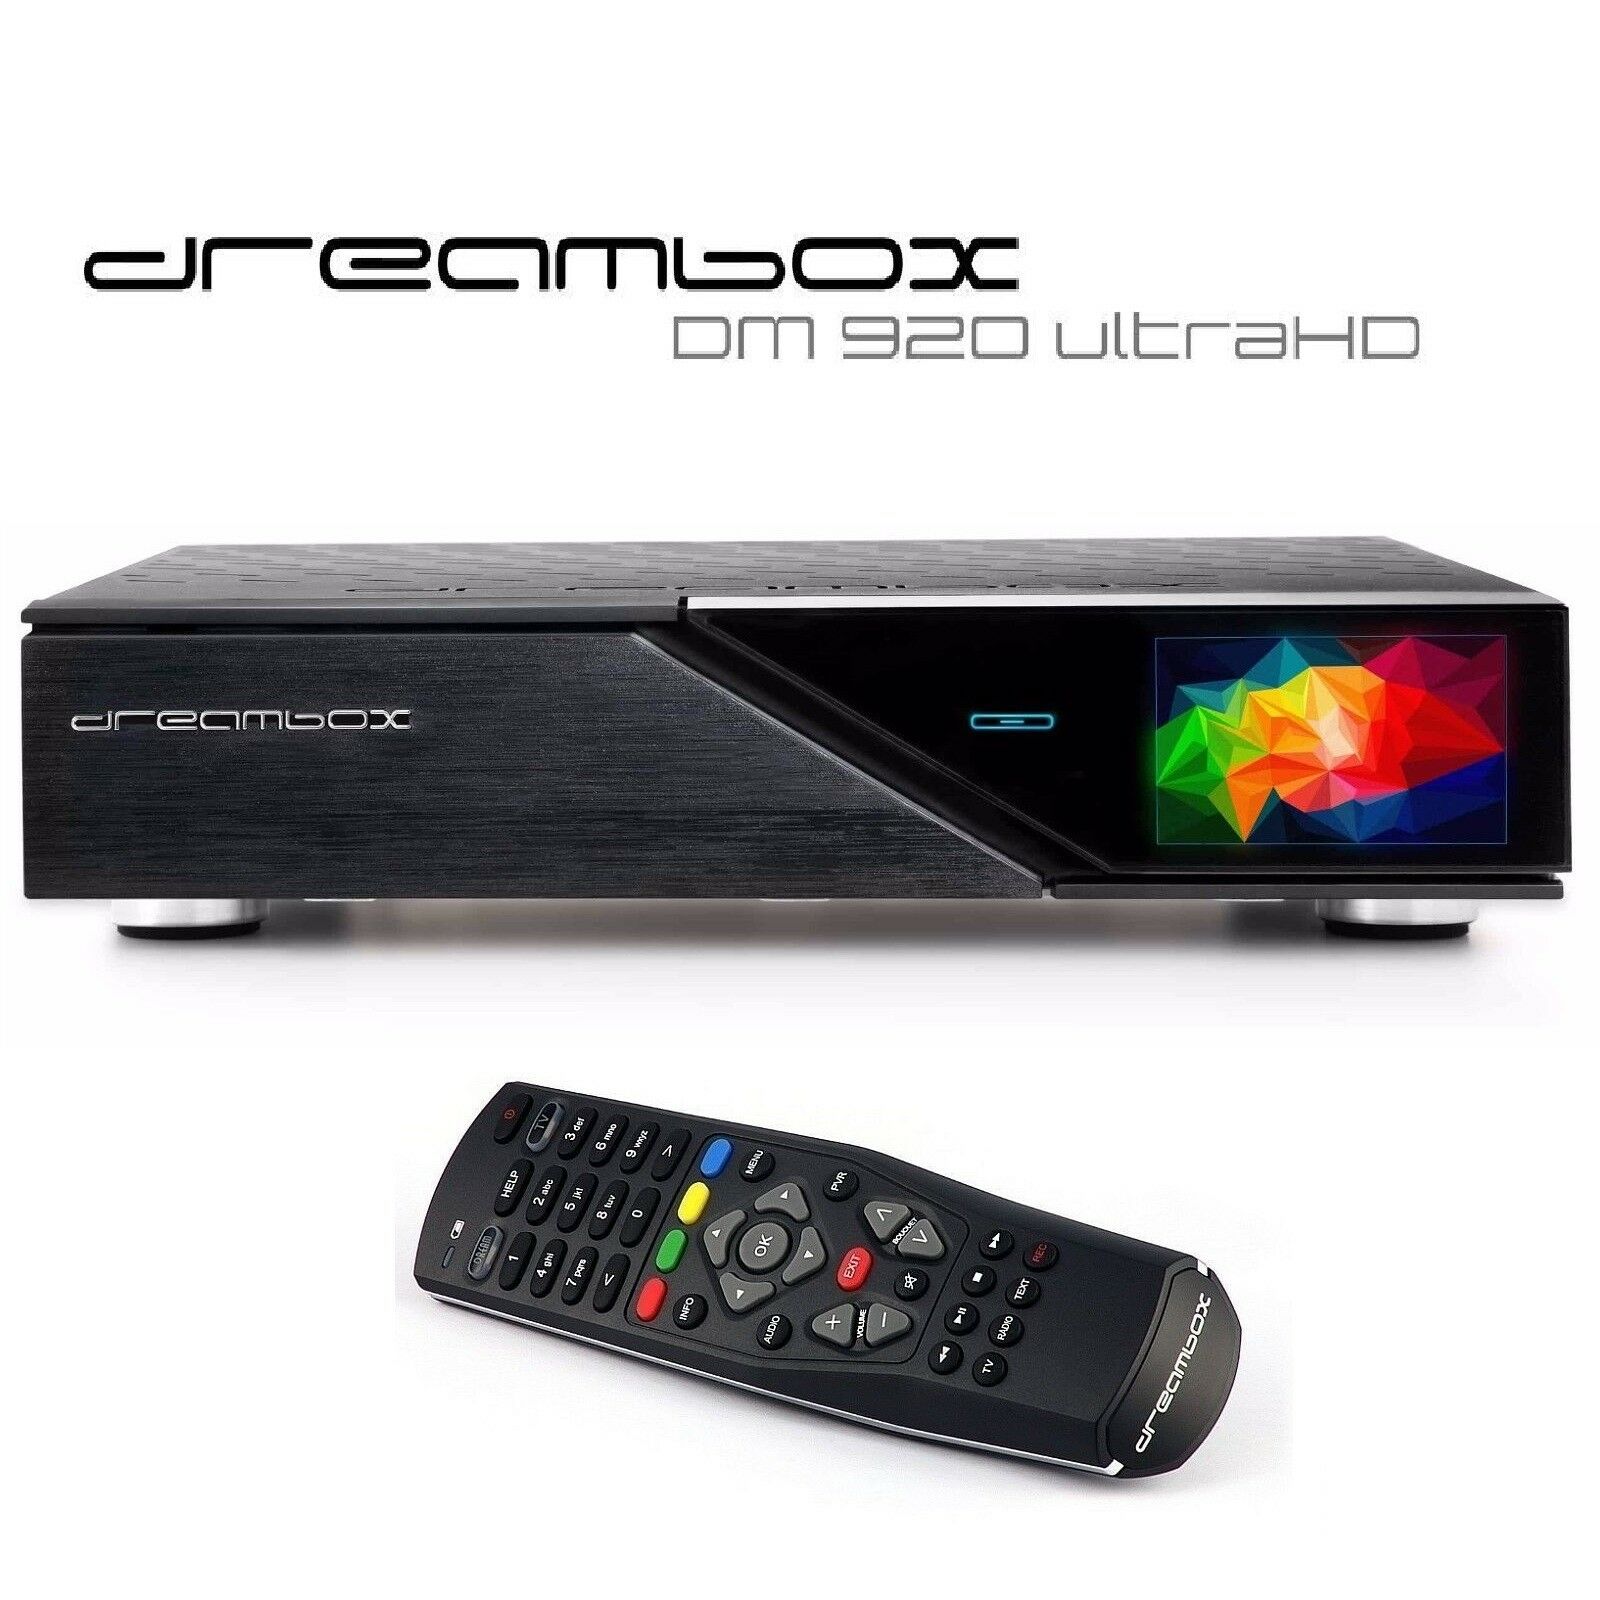 Dreambox DM920 UHD 4K 1x DVB-S2X FBC Multistream / 1x DVB-C FBC Tuner E2 Linux PVR Receiver